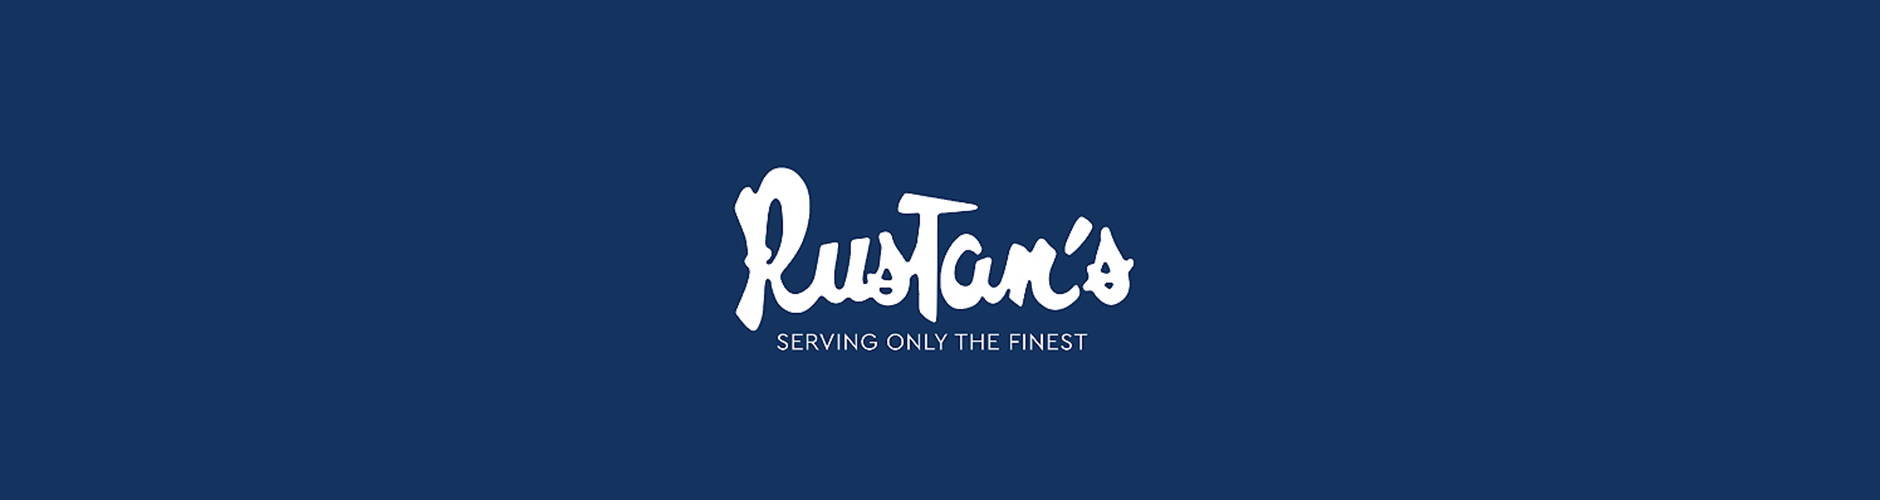 Rustans.com Delivery Update April 24, 2020